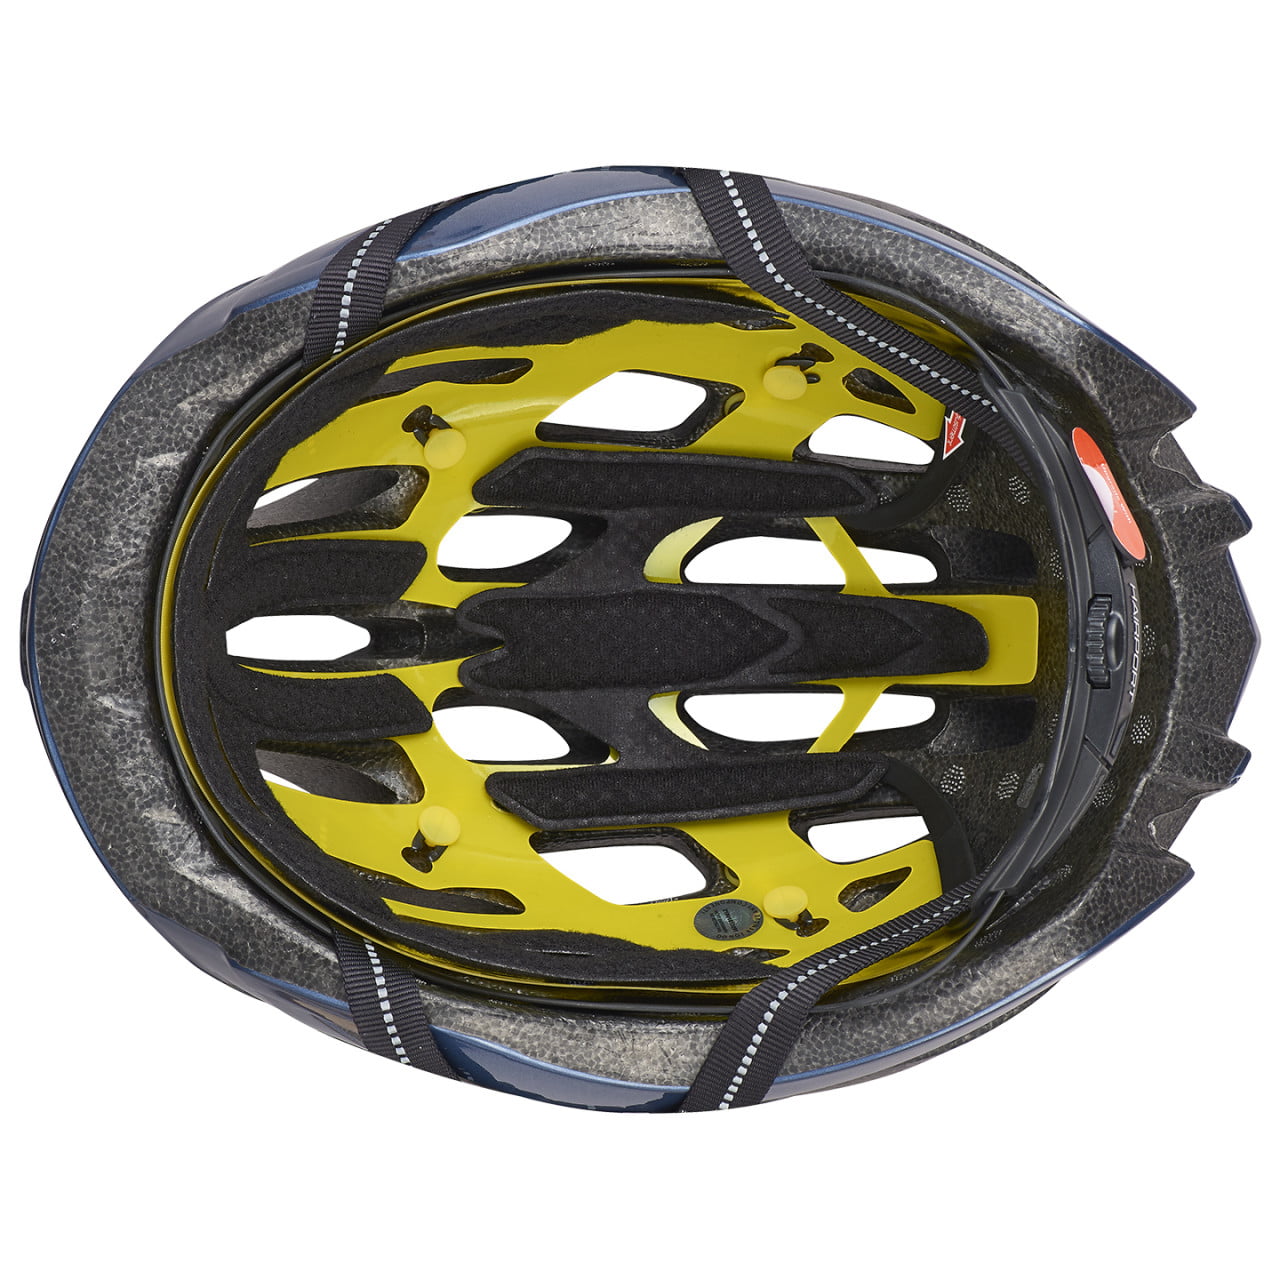 Echelon II Mips 2024 Road Bike Helmet